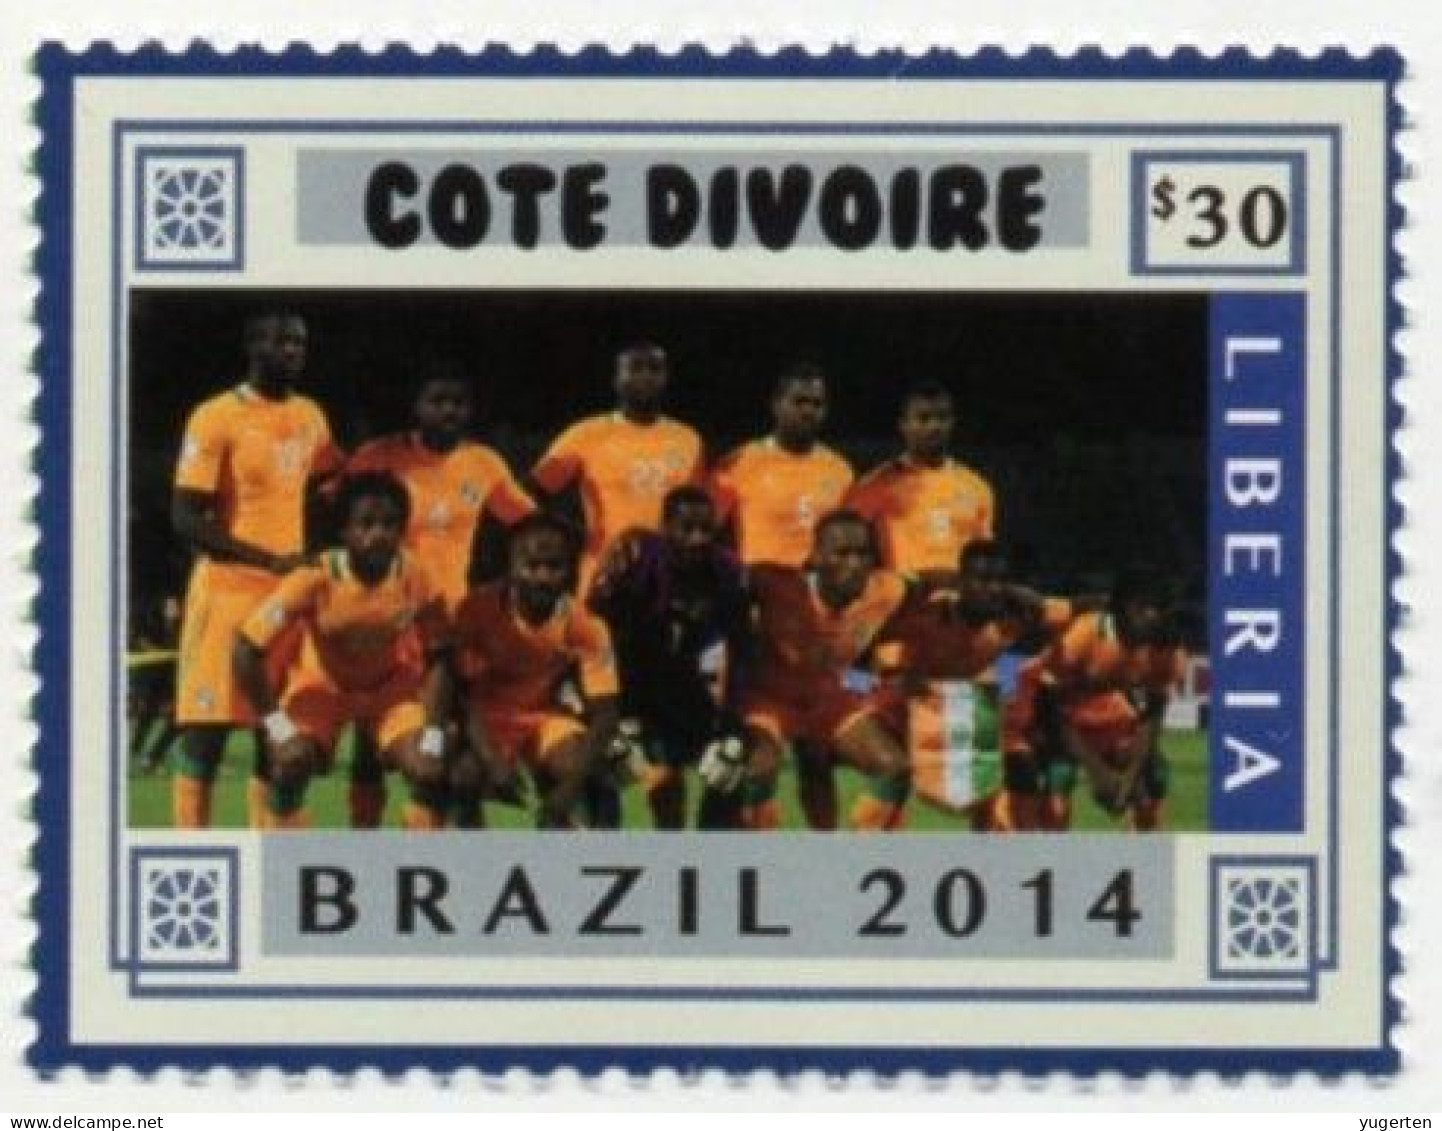 LIBERIA 2014 - 1v - MNH - Ivory Coast Team - Brazil World Football Championship - Soccer Calcio - Football - World Cup - 2014 – Brasilien